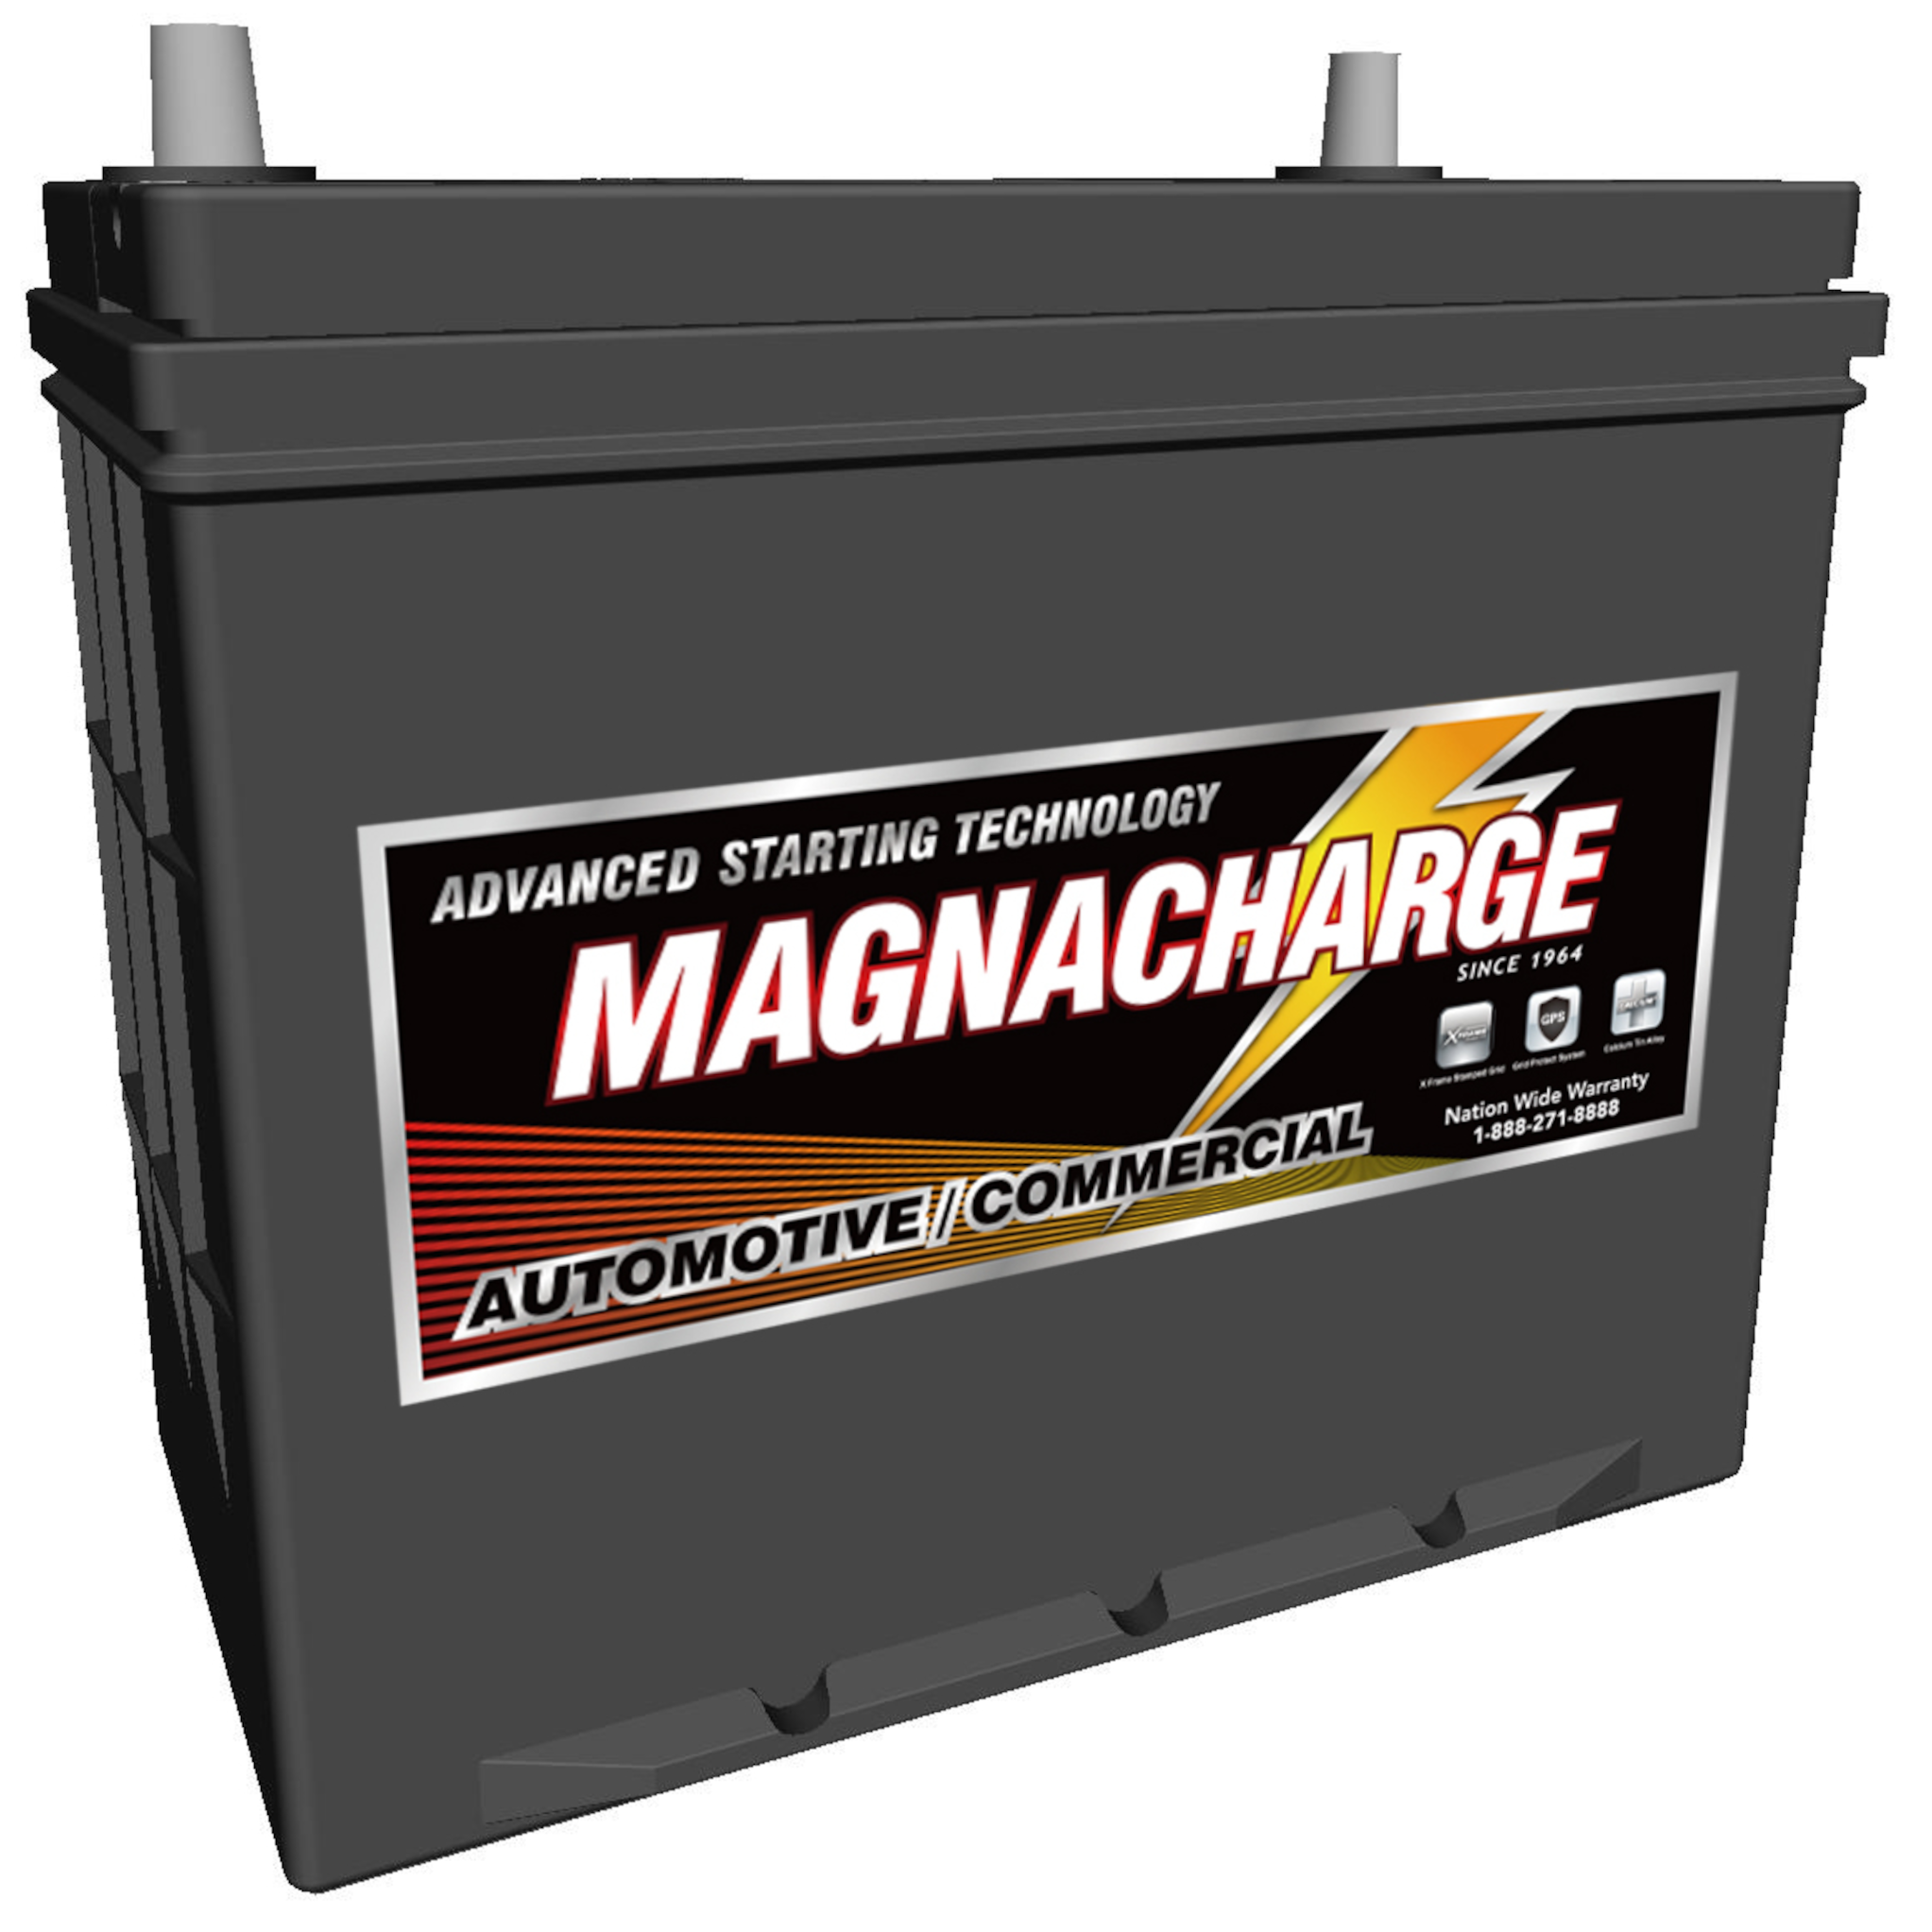 Magnacharge MIATA 12V Car Battery